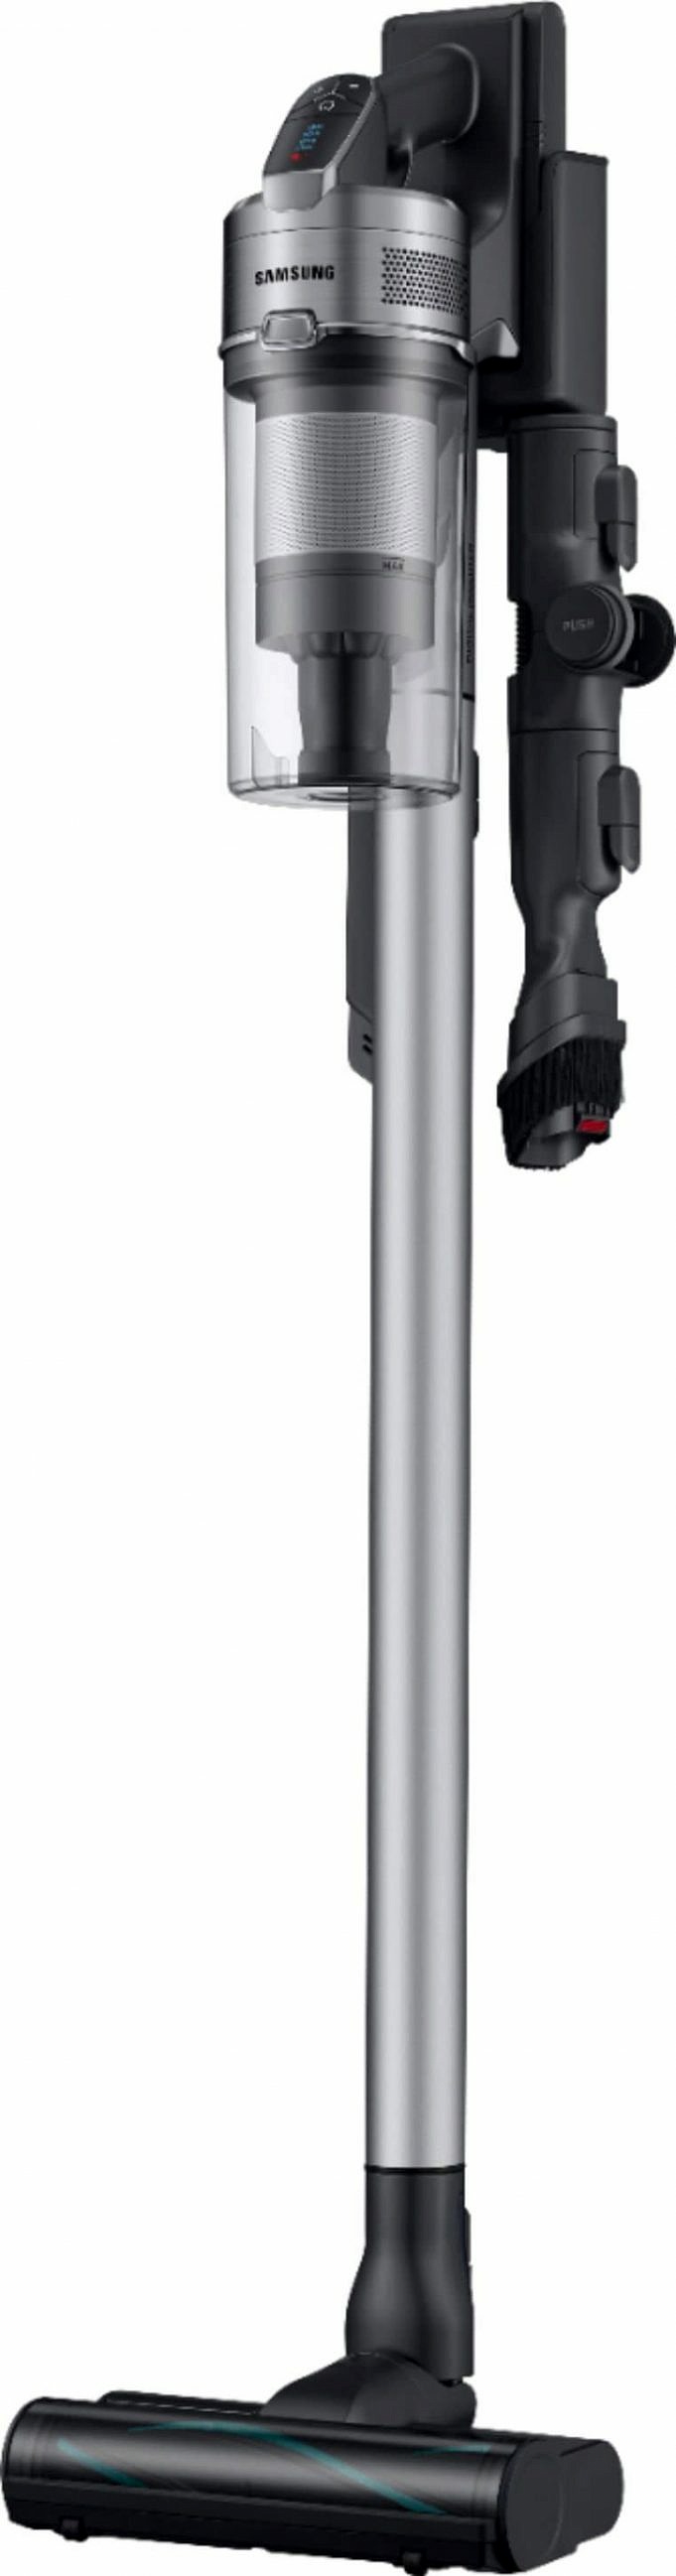 Samsung Jet 90 Complete Stick Vacuum Review